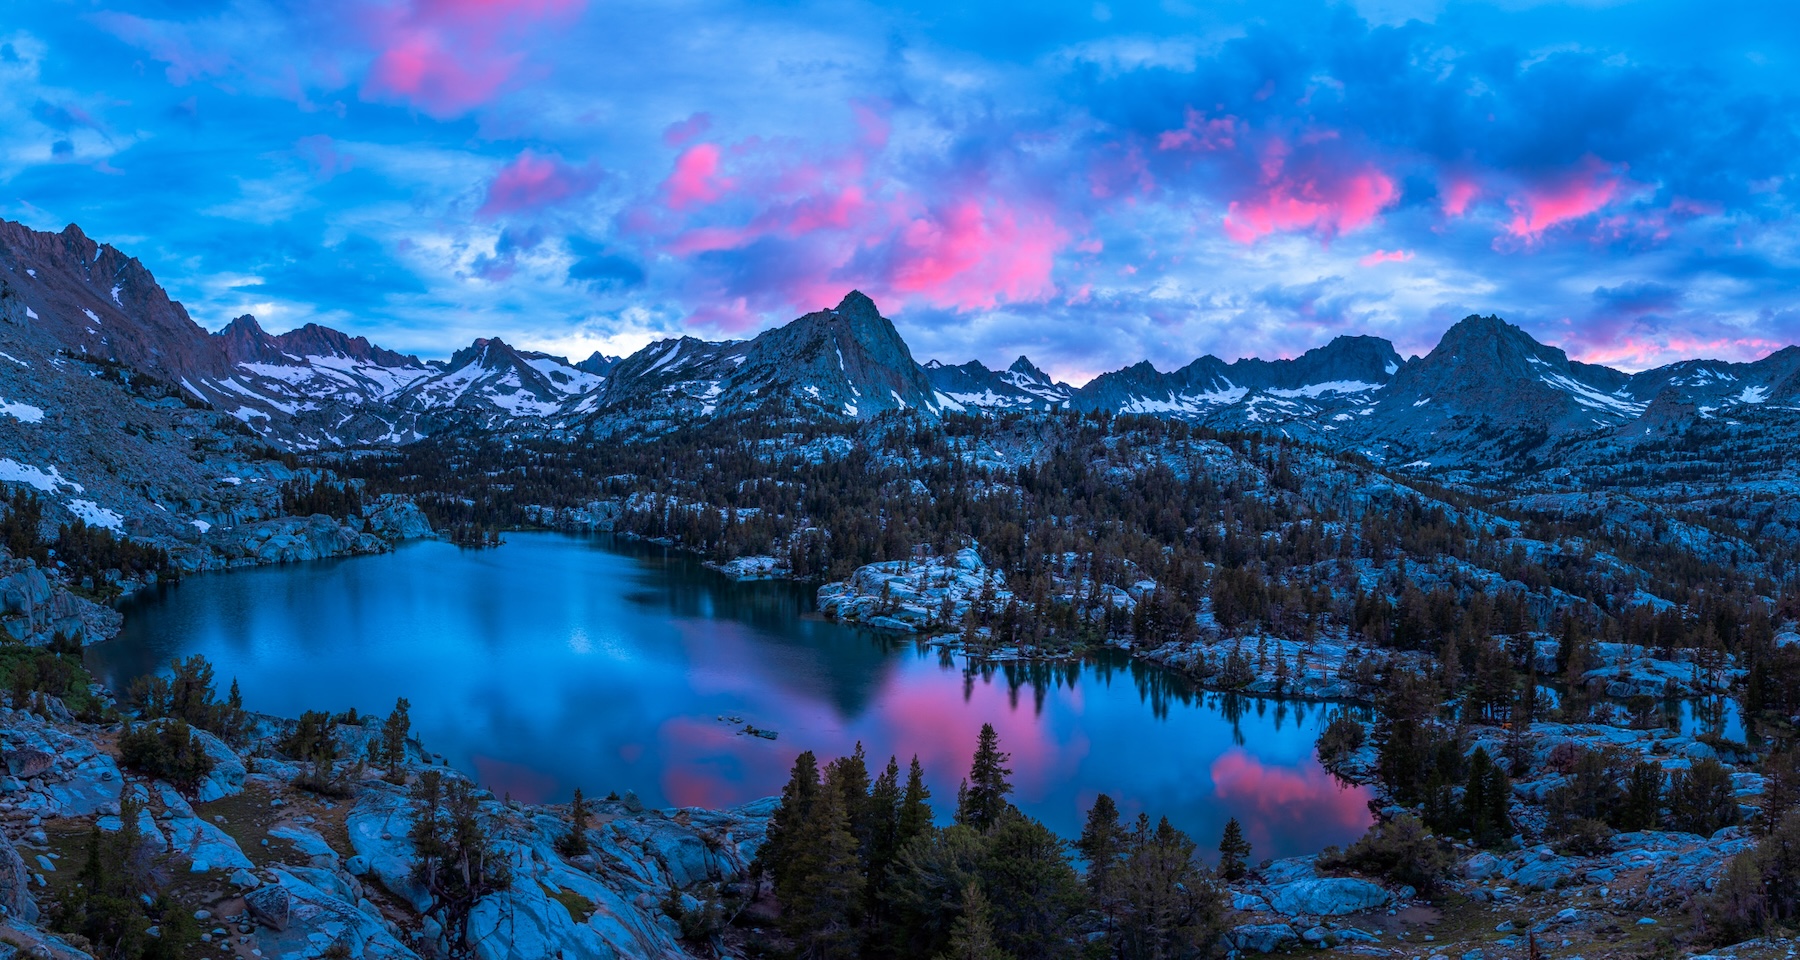 Sunrise at Blue Lake in the Sabrina Basin of the Sierras. Photo by Brock Dallman